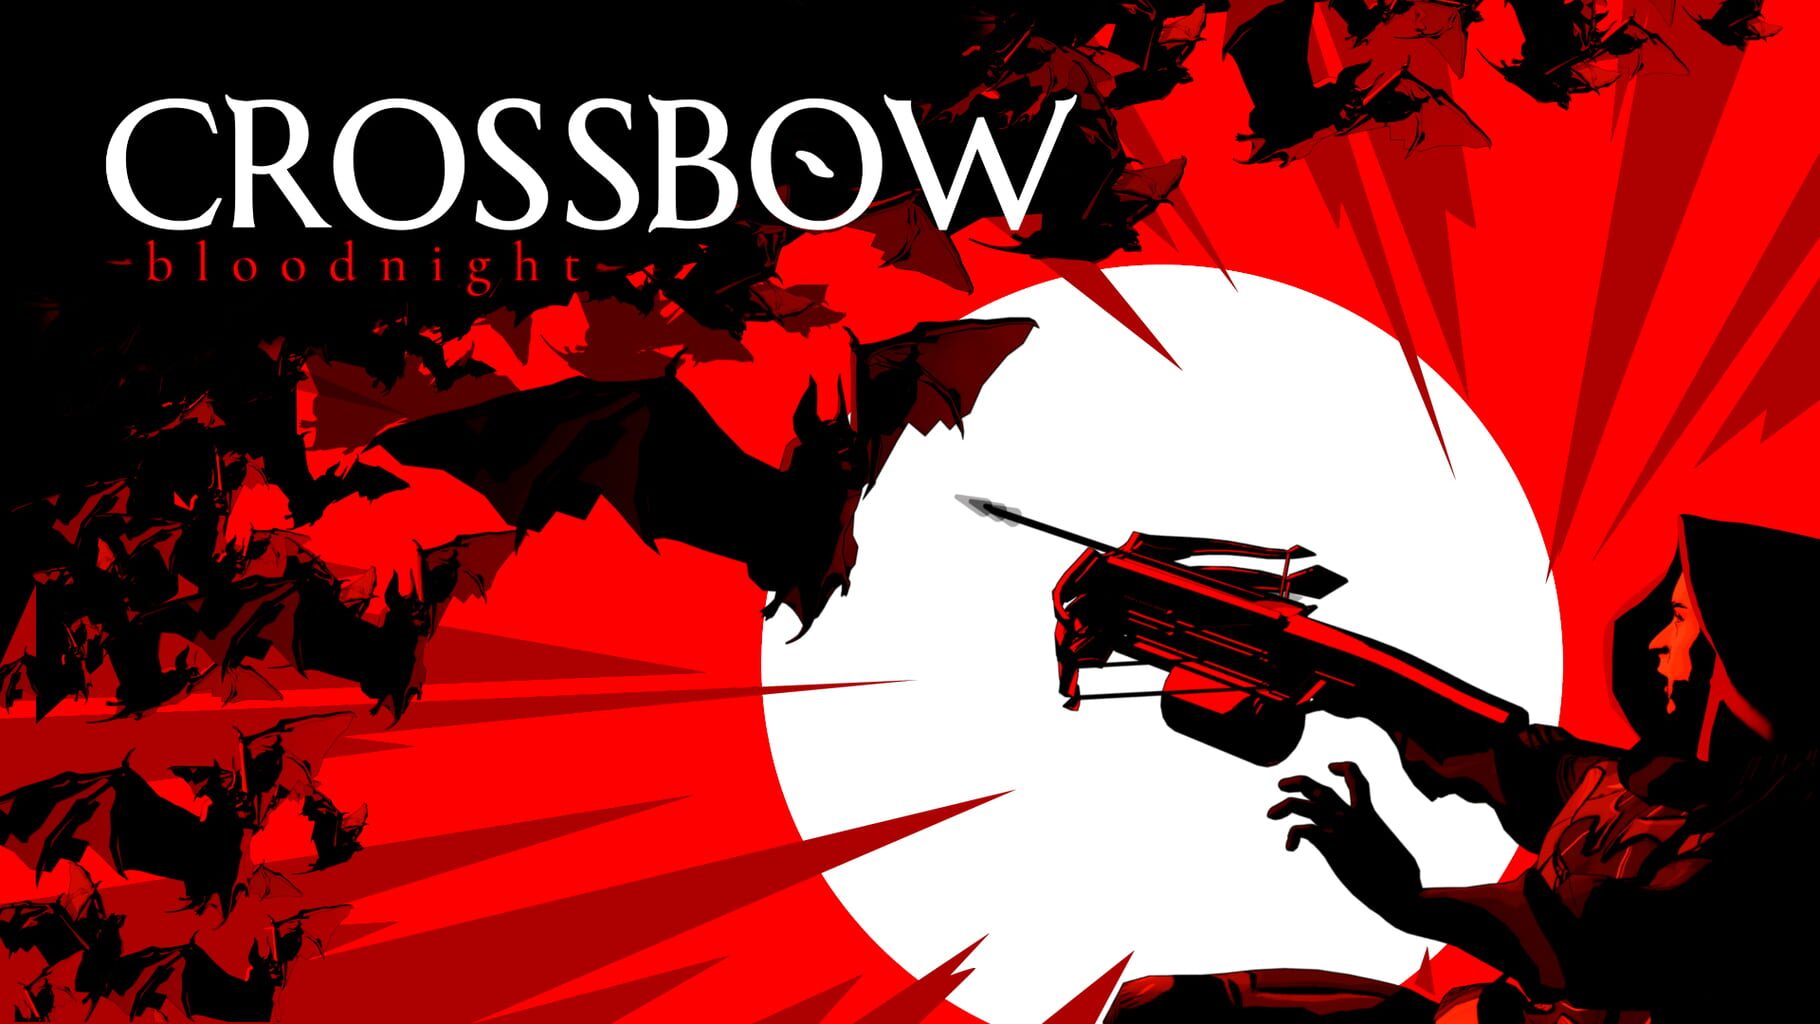 Crossbow: Bloodnight artwork